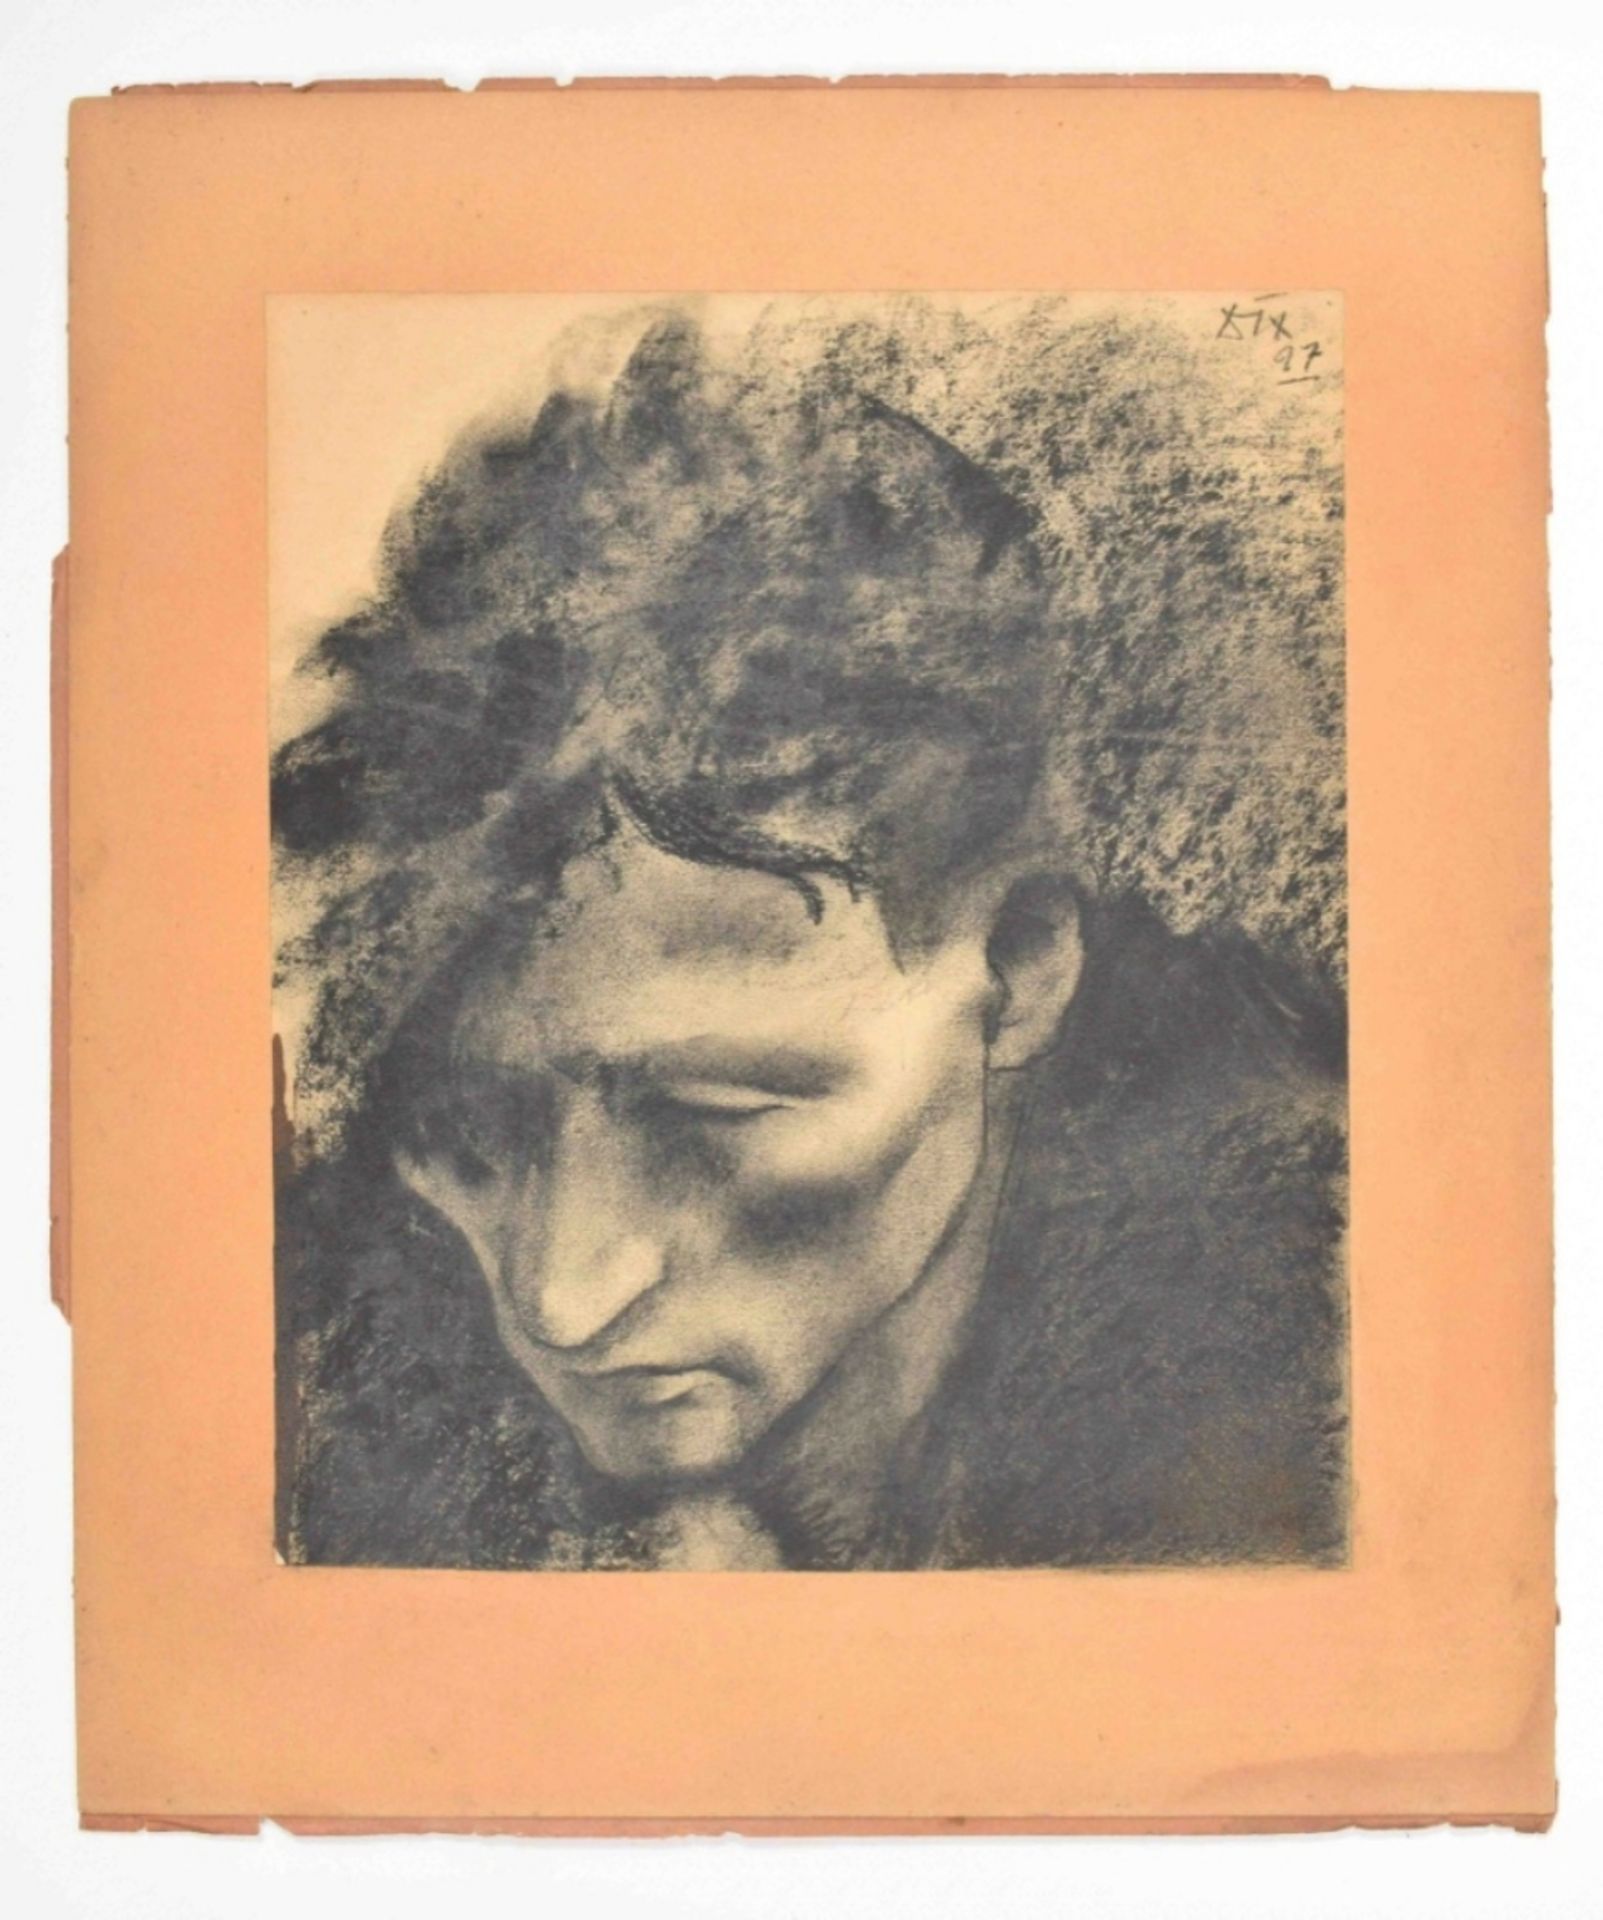 Otto Dix (1891-1969). "Portrait of a man"